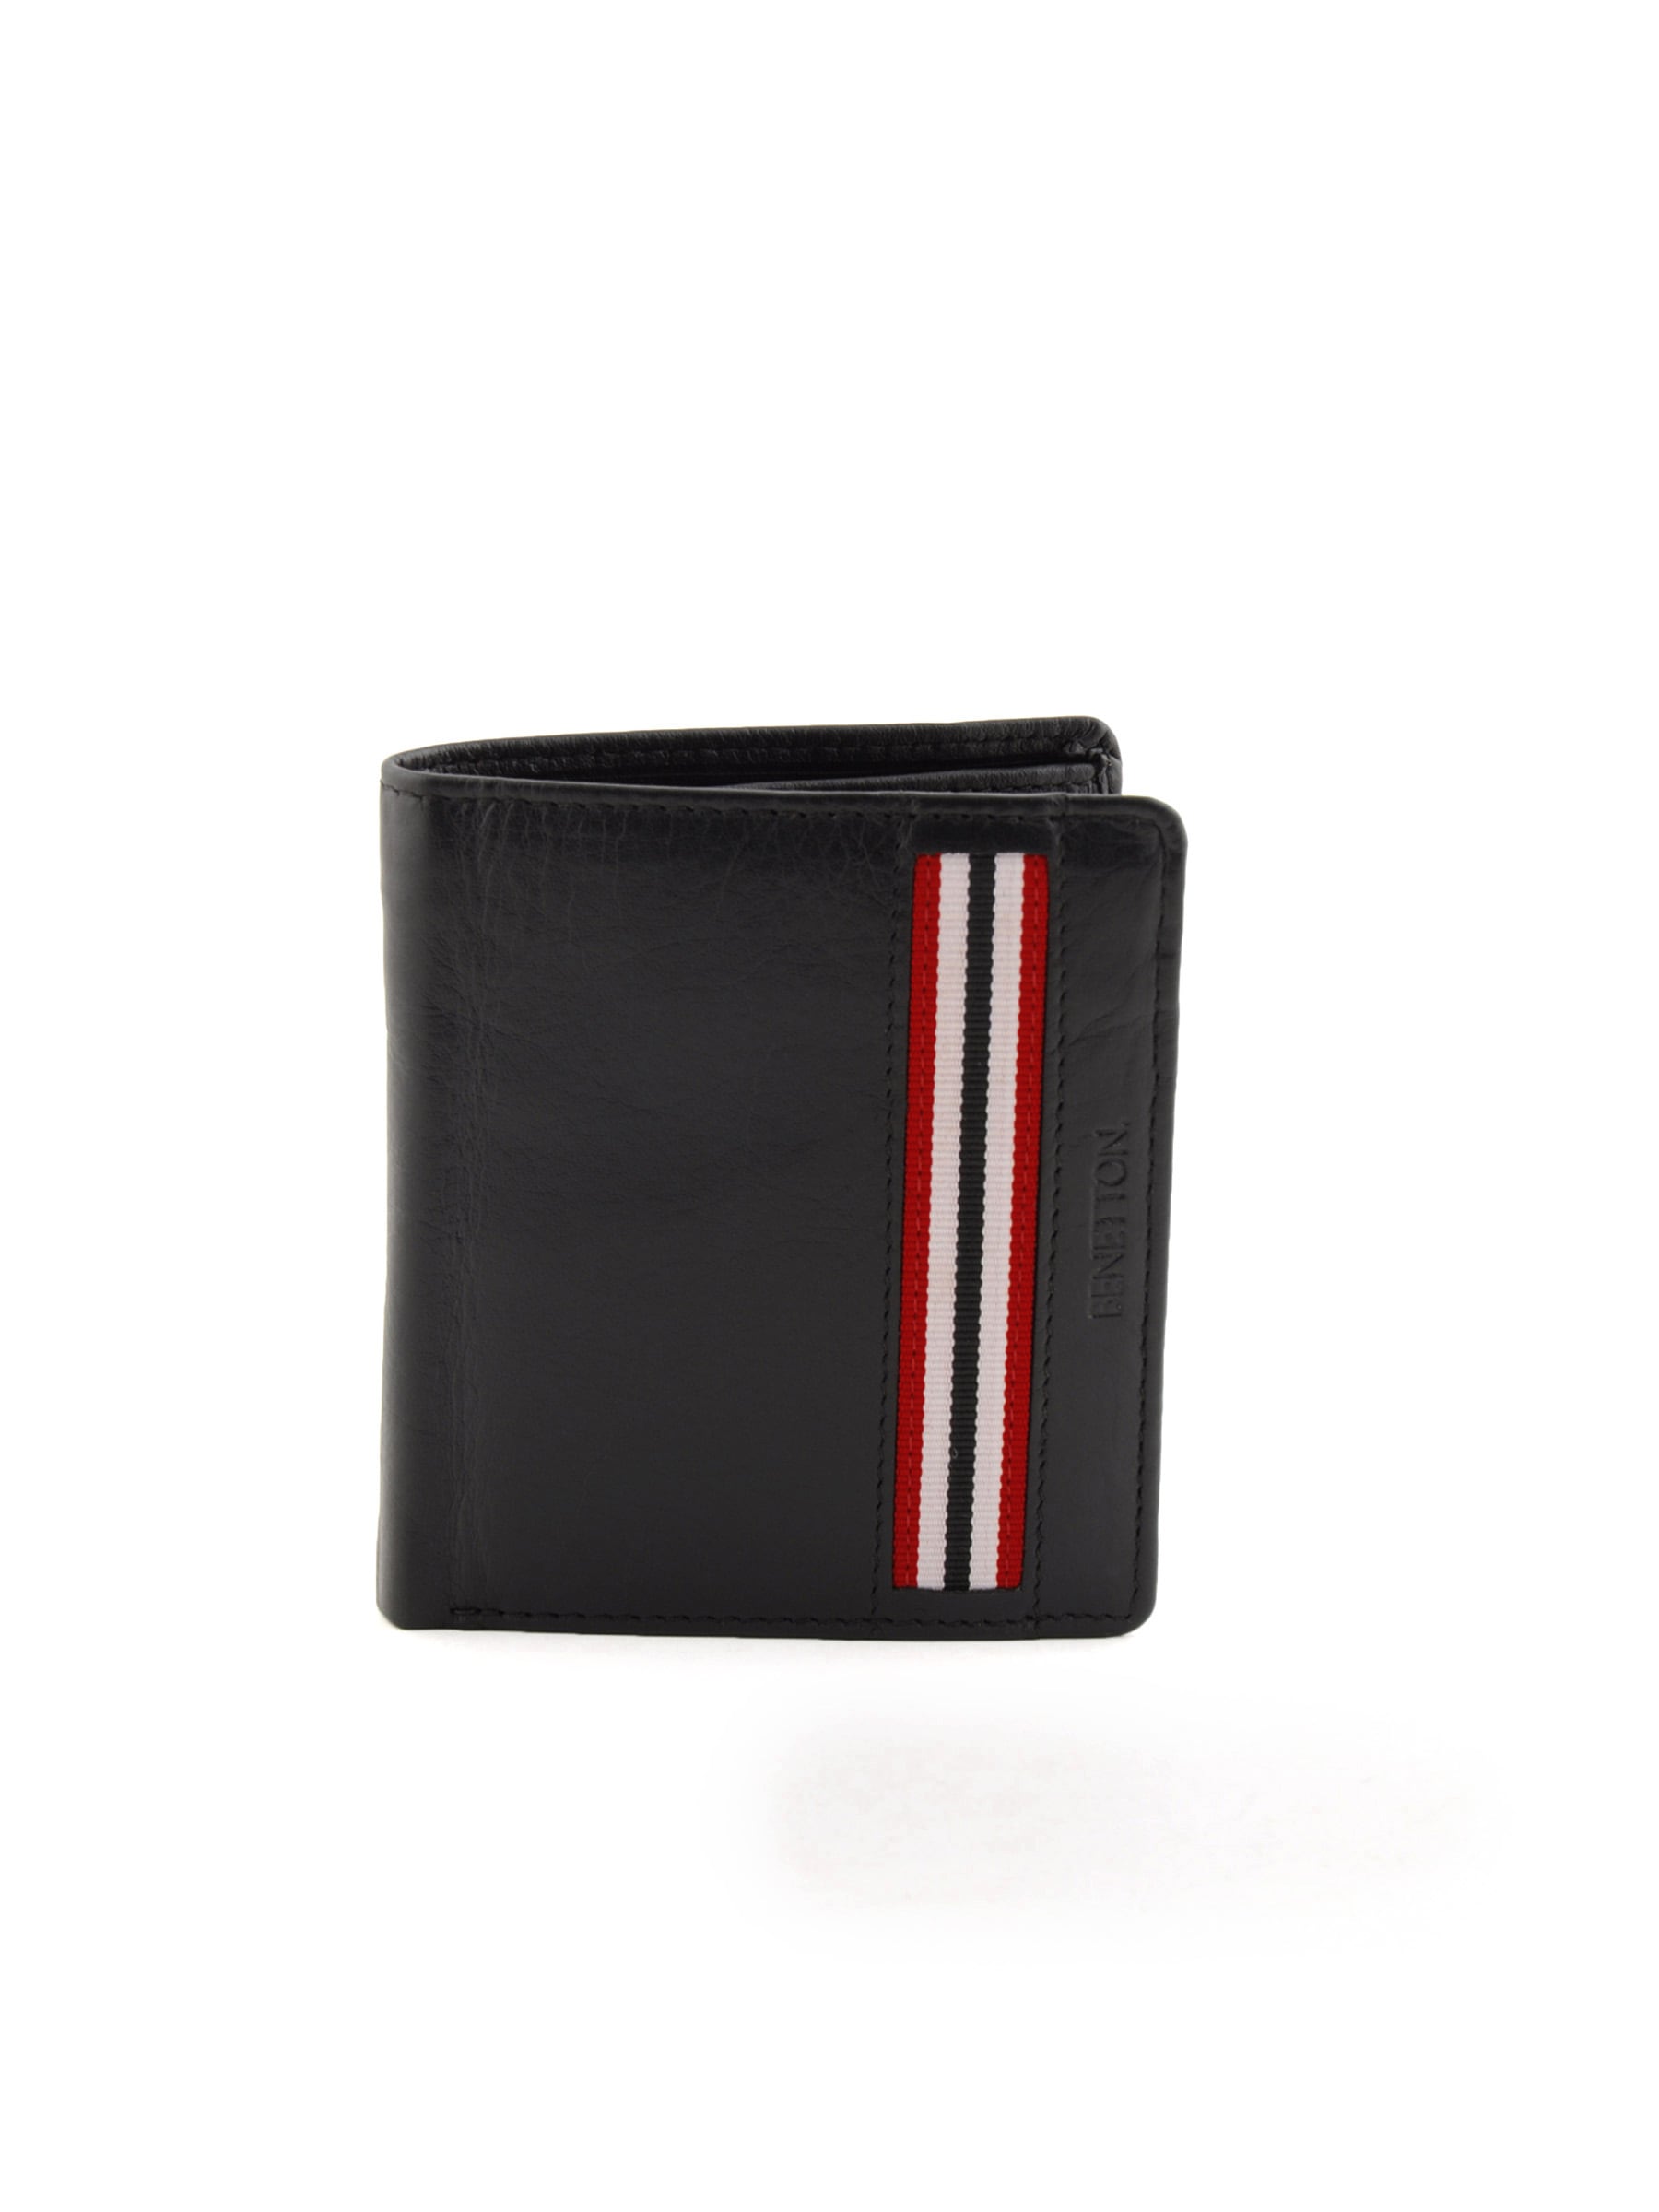 United Colors of Benetton Men Solid Black Wallet